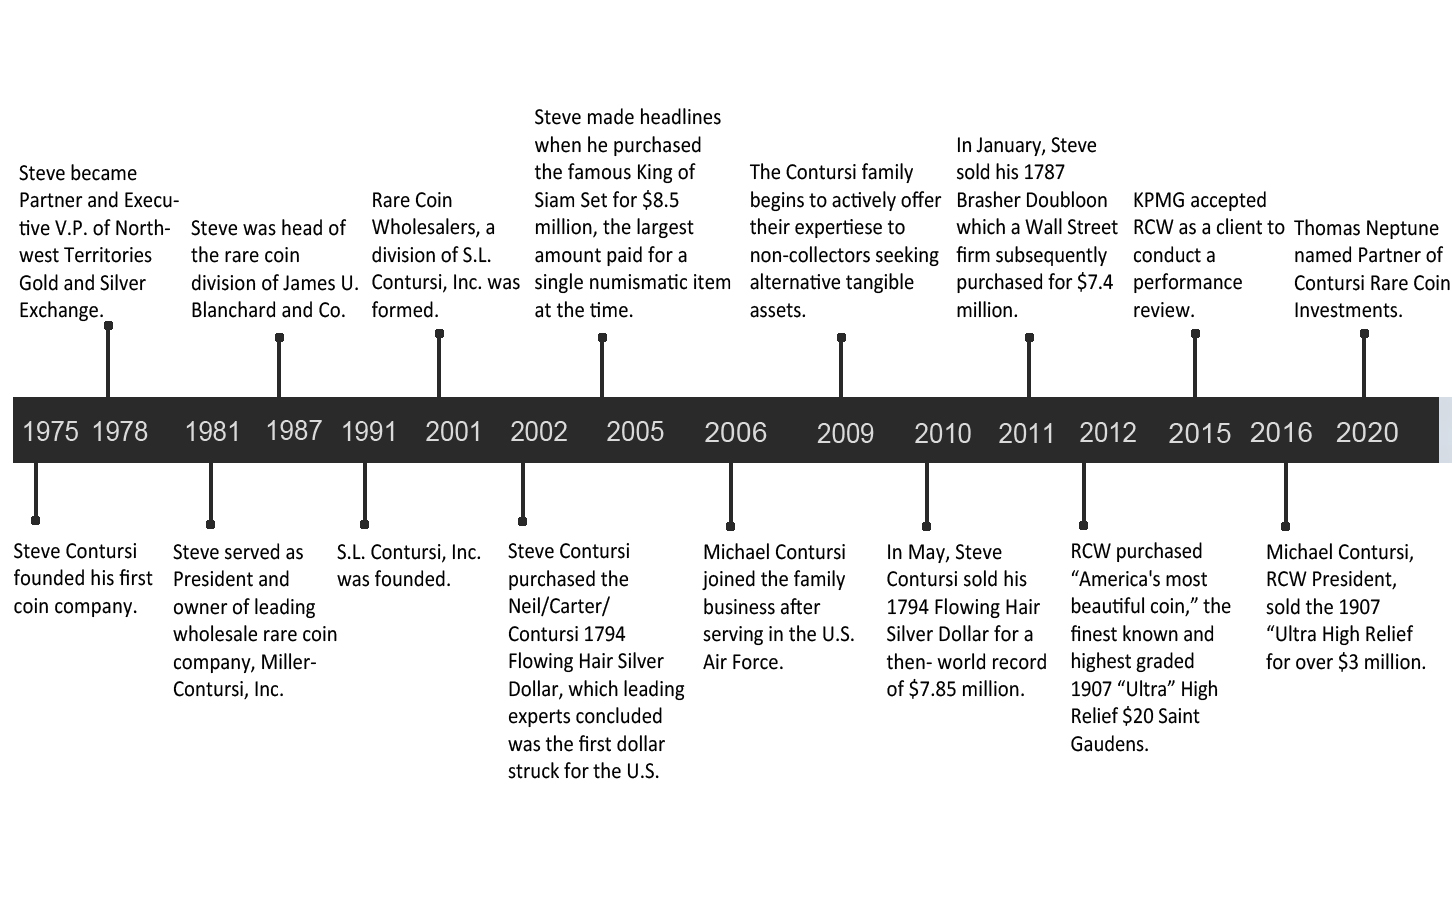 Image of Company Timeline